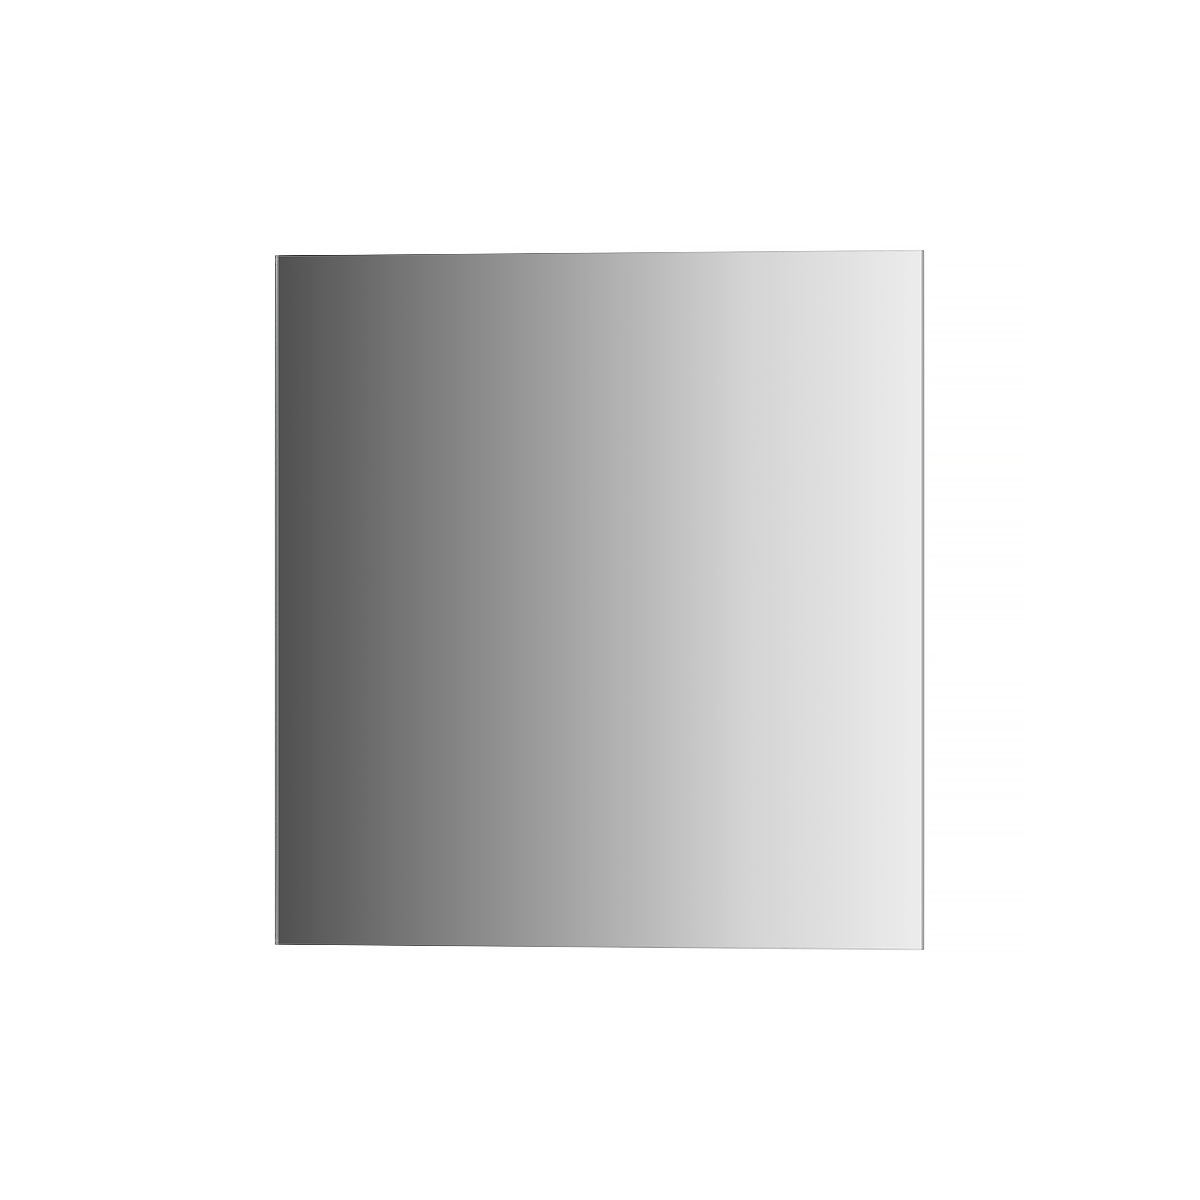 Зеркальная плитка со шлифованной кромкой  Evoform BY 1407 25x25см зеркальная плитка mirox 3g sensea nnlm31 квадратная 30x30 см глянцевая серебро 1 шт